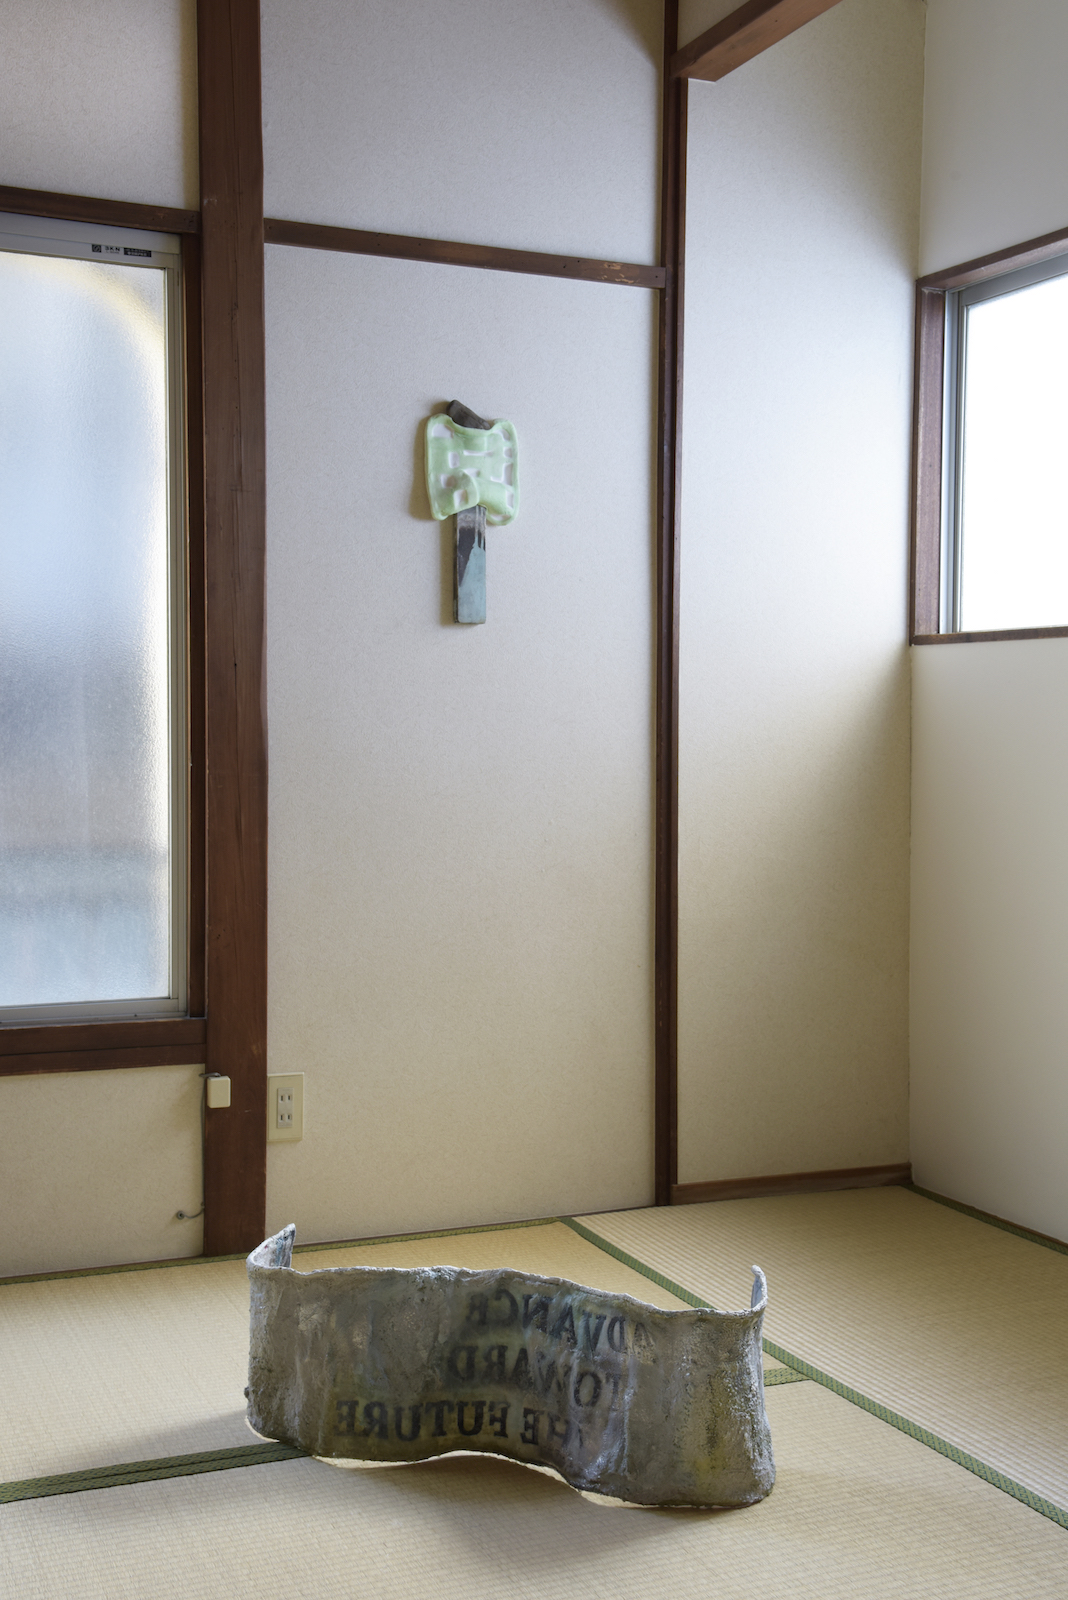 Installation view. Tatami room.